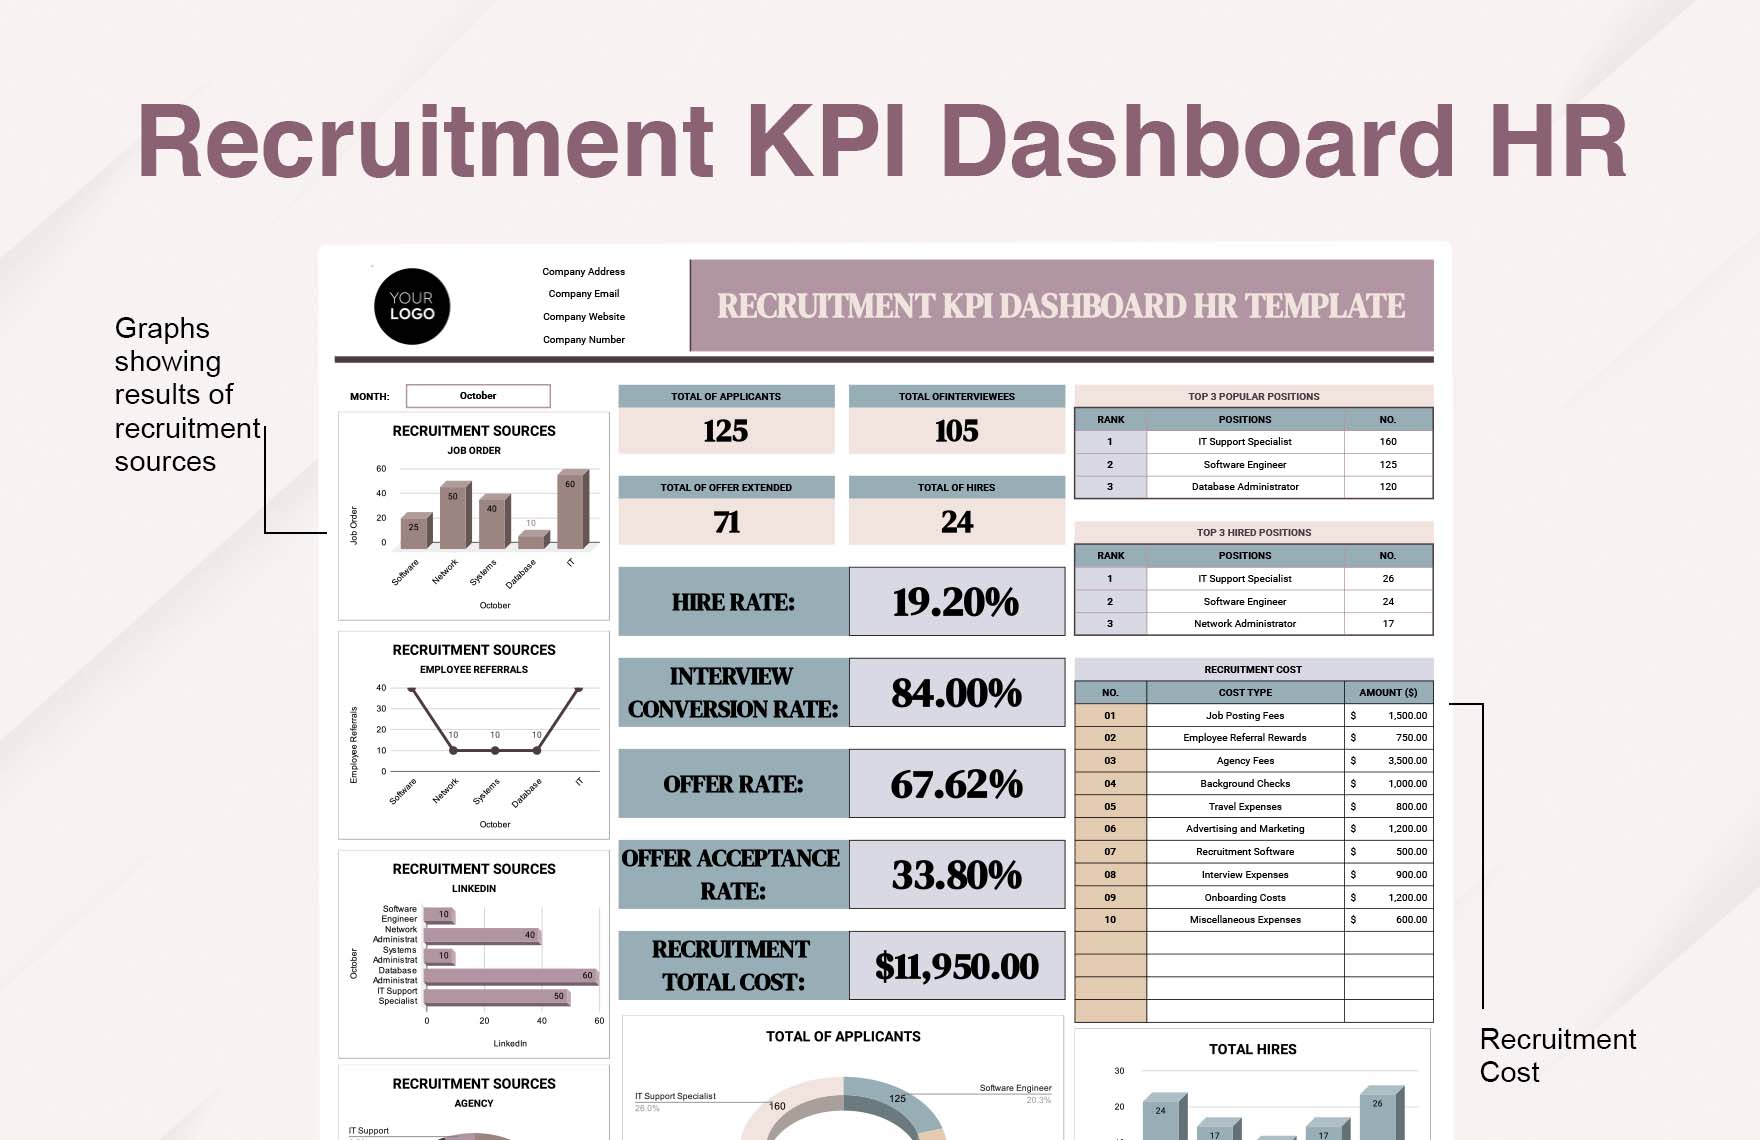 Recruitment KPI Dashboard HR Template